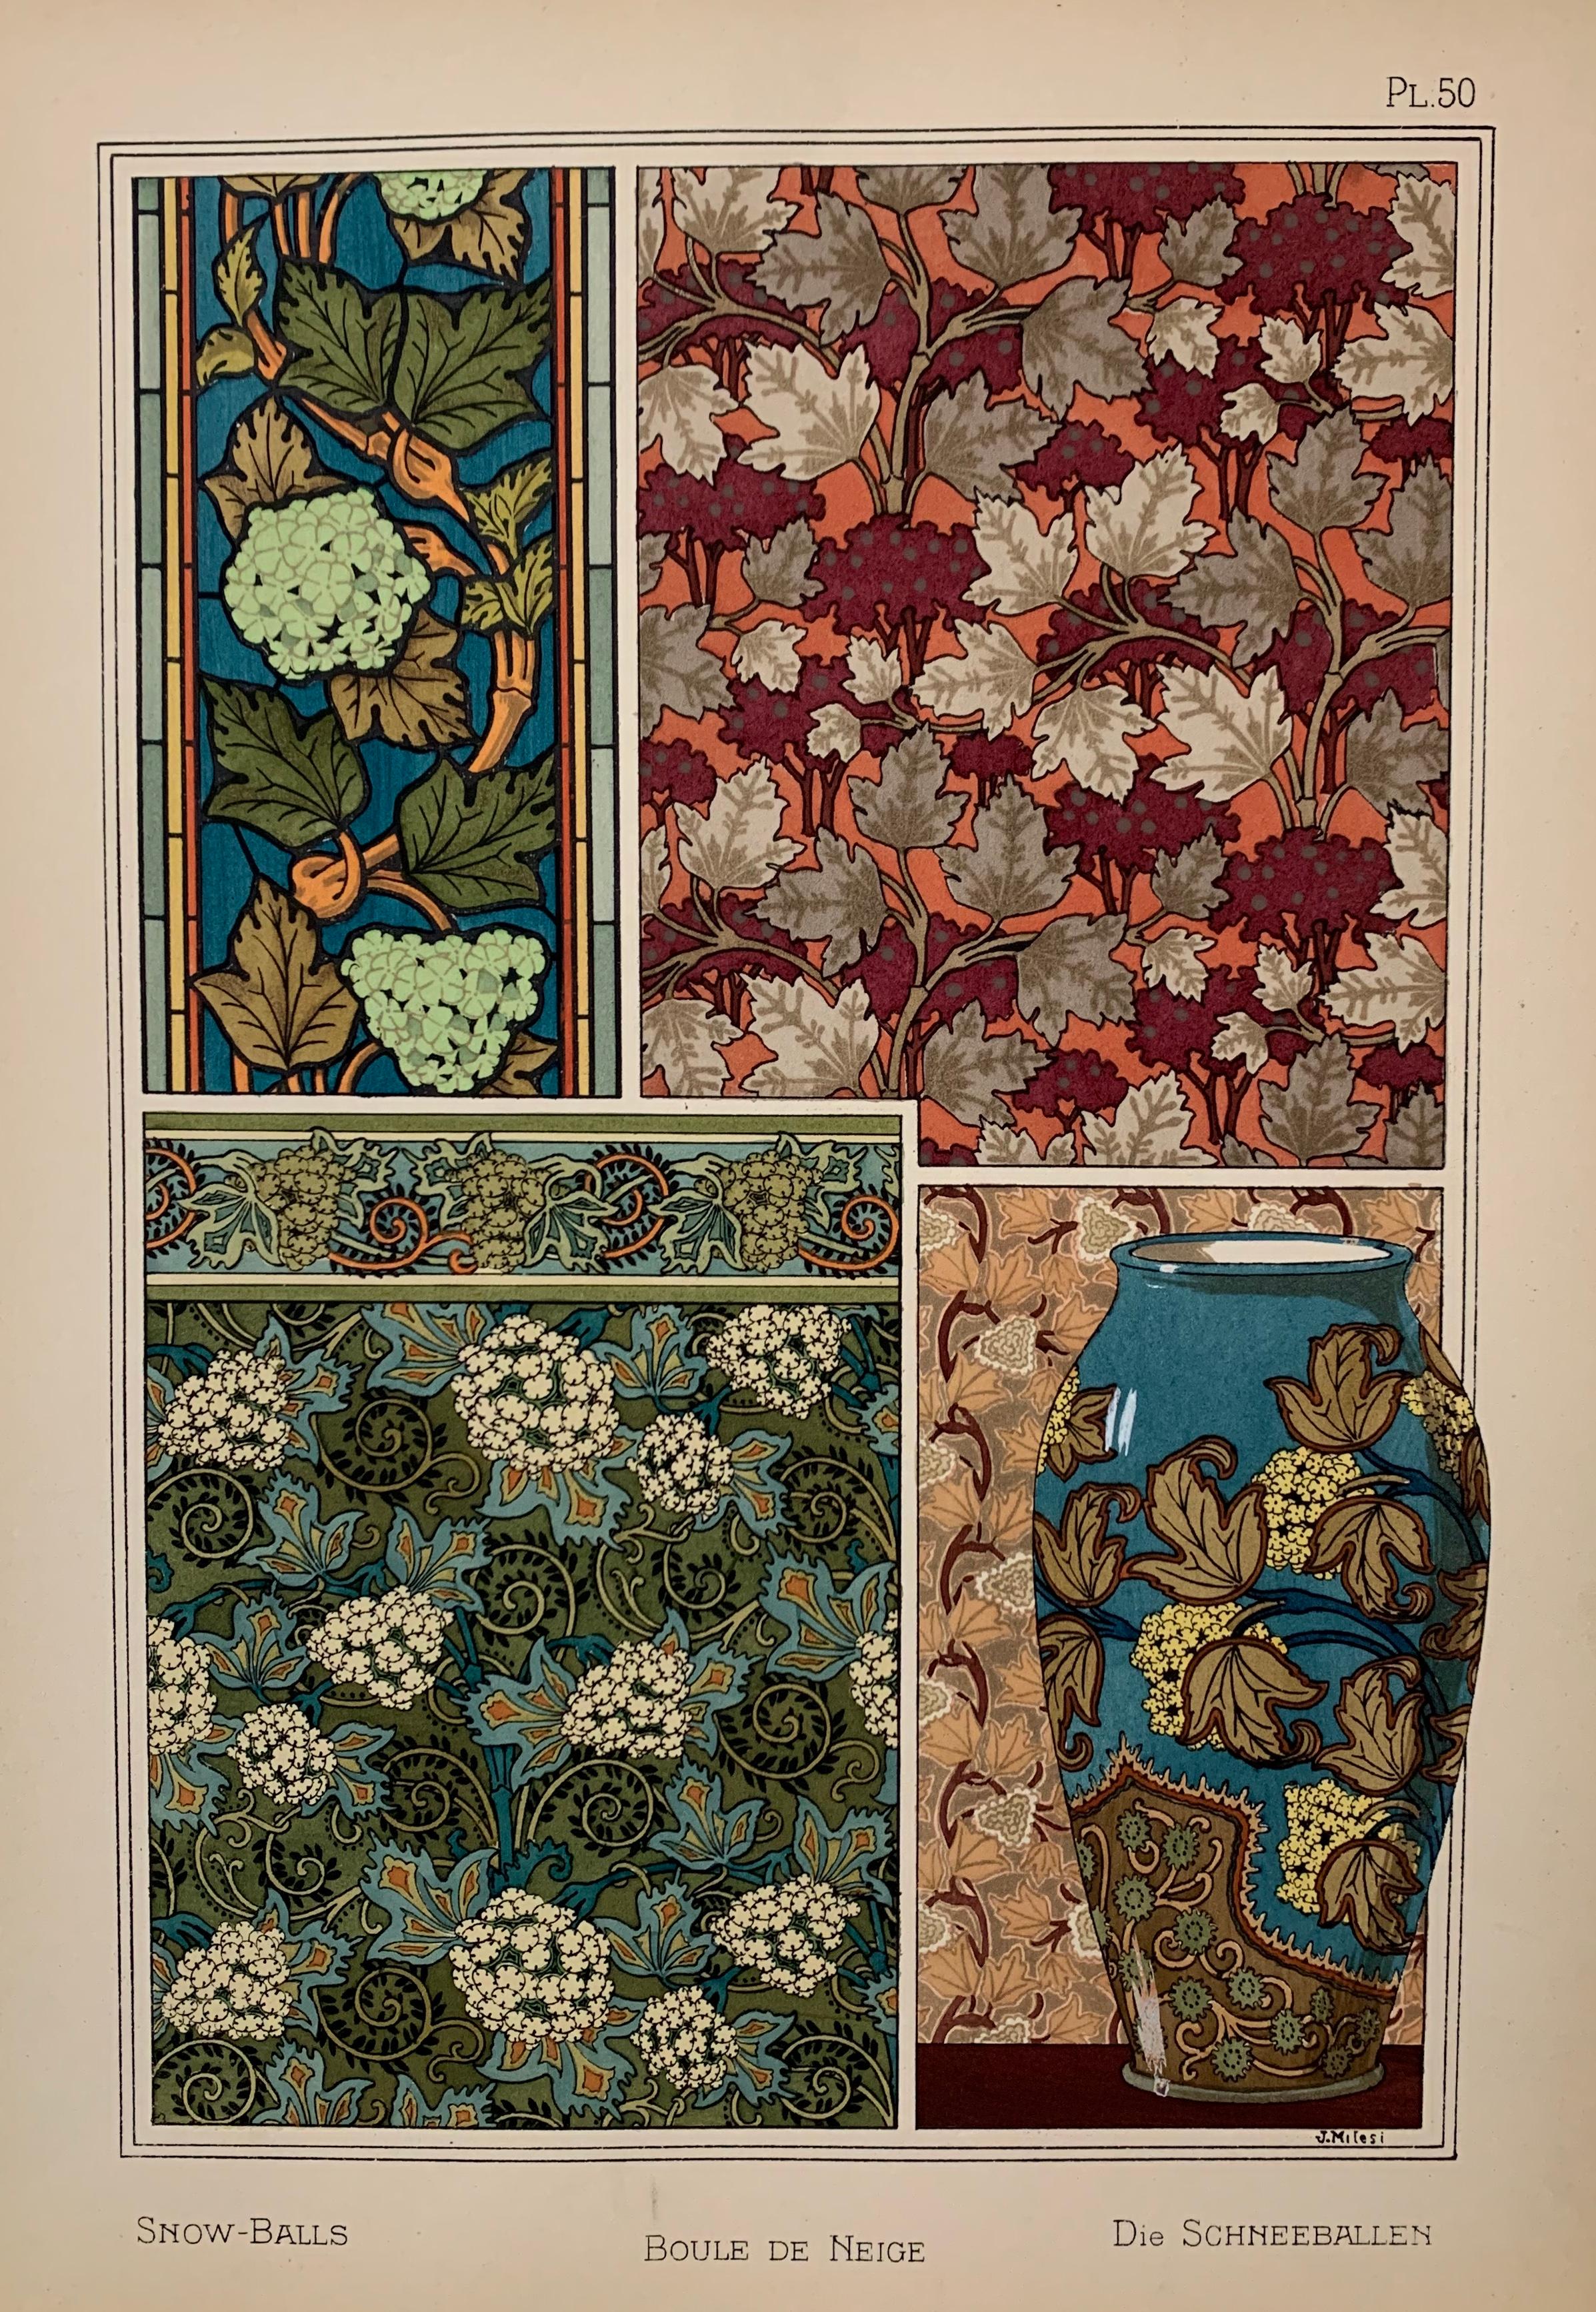 La plante et ses Applications Ornamentales Volumes 1 and 2 - Print by Eugene Grasset